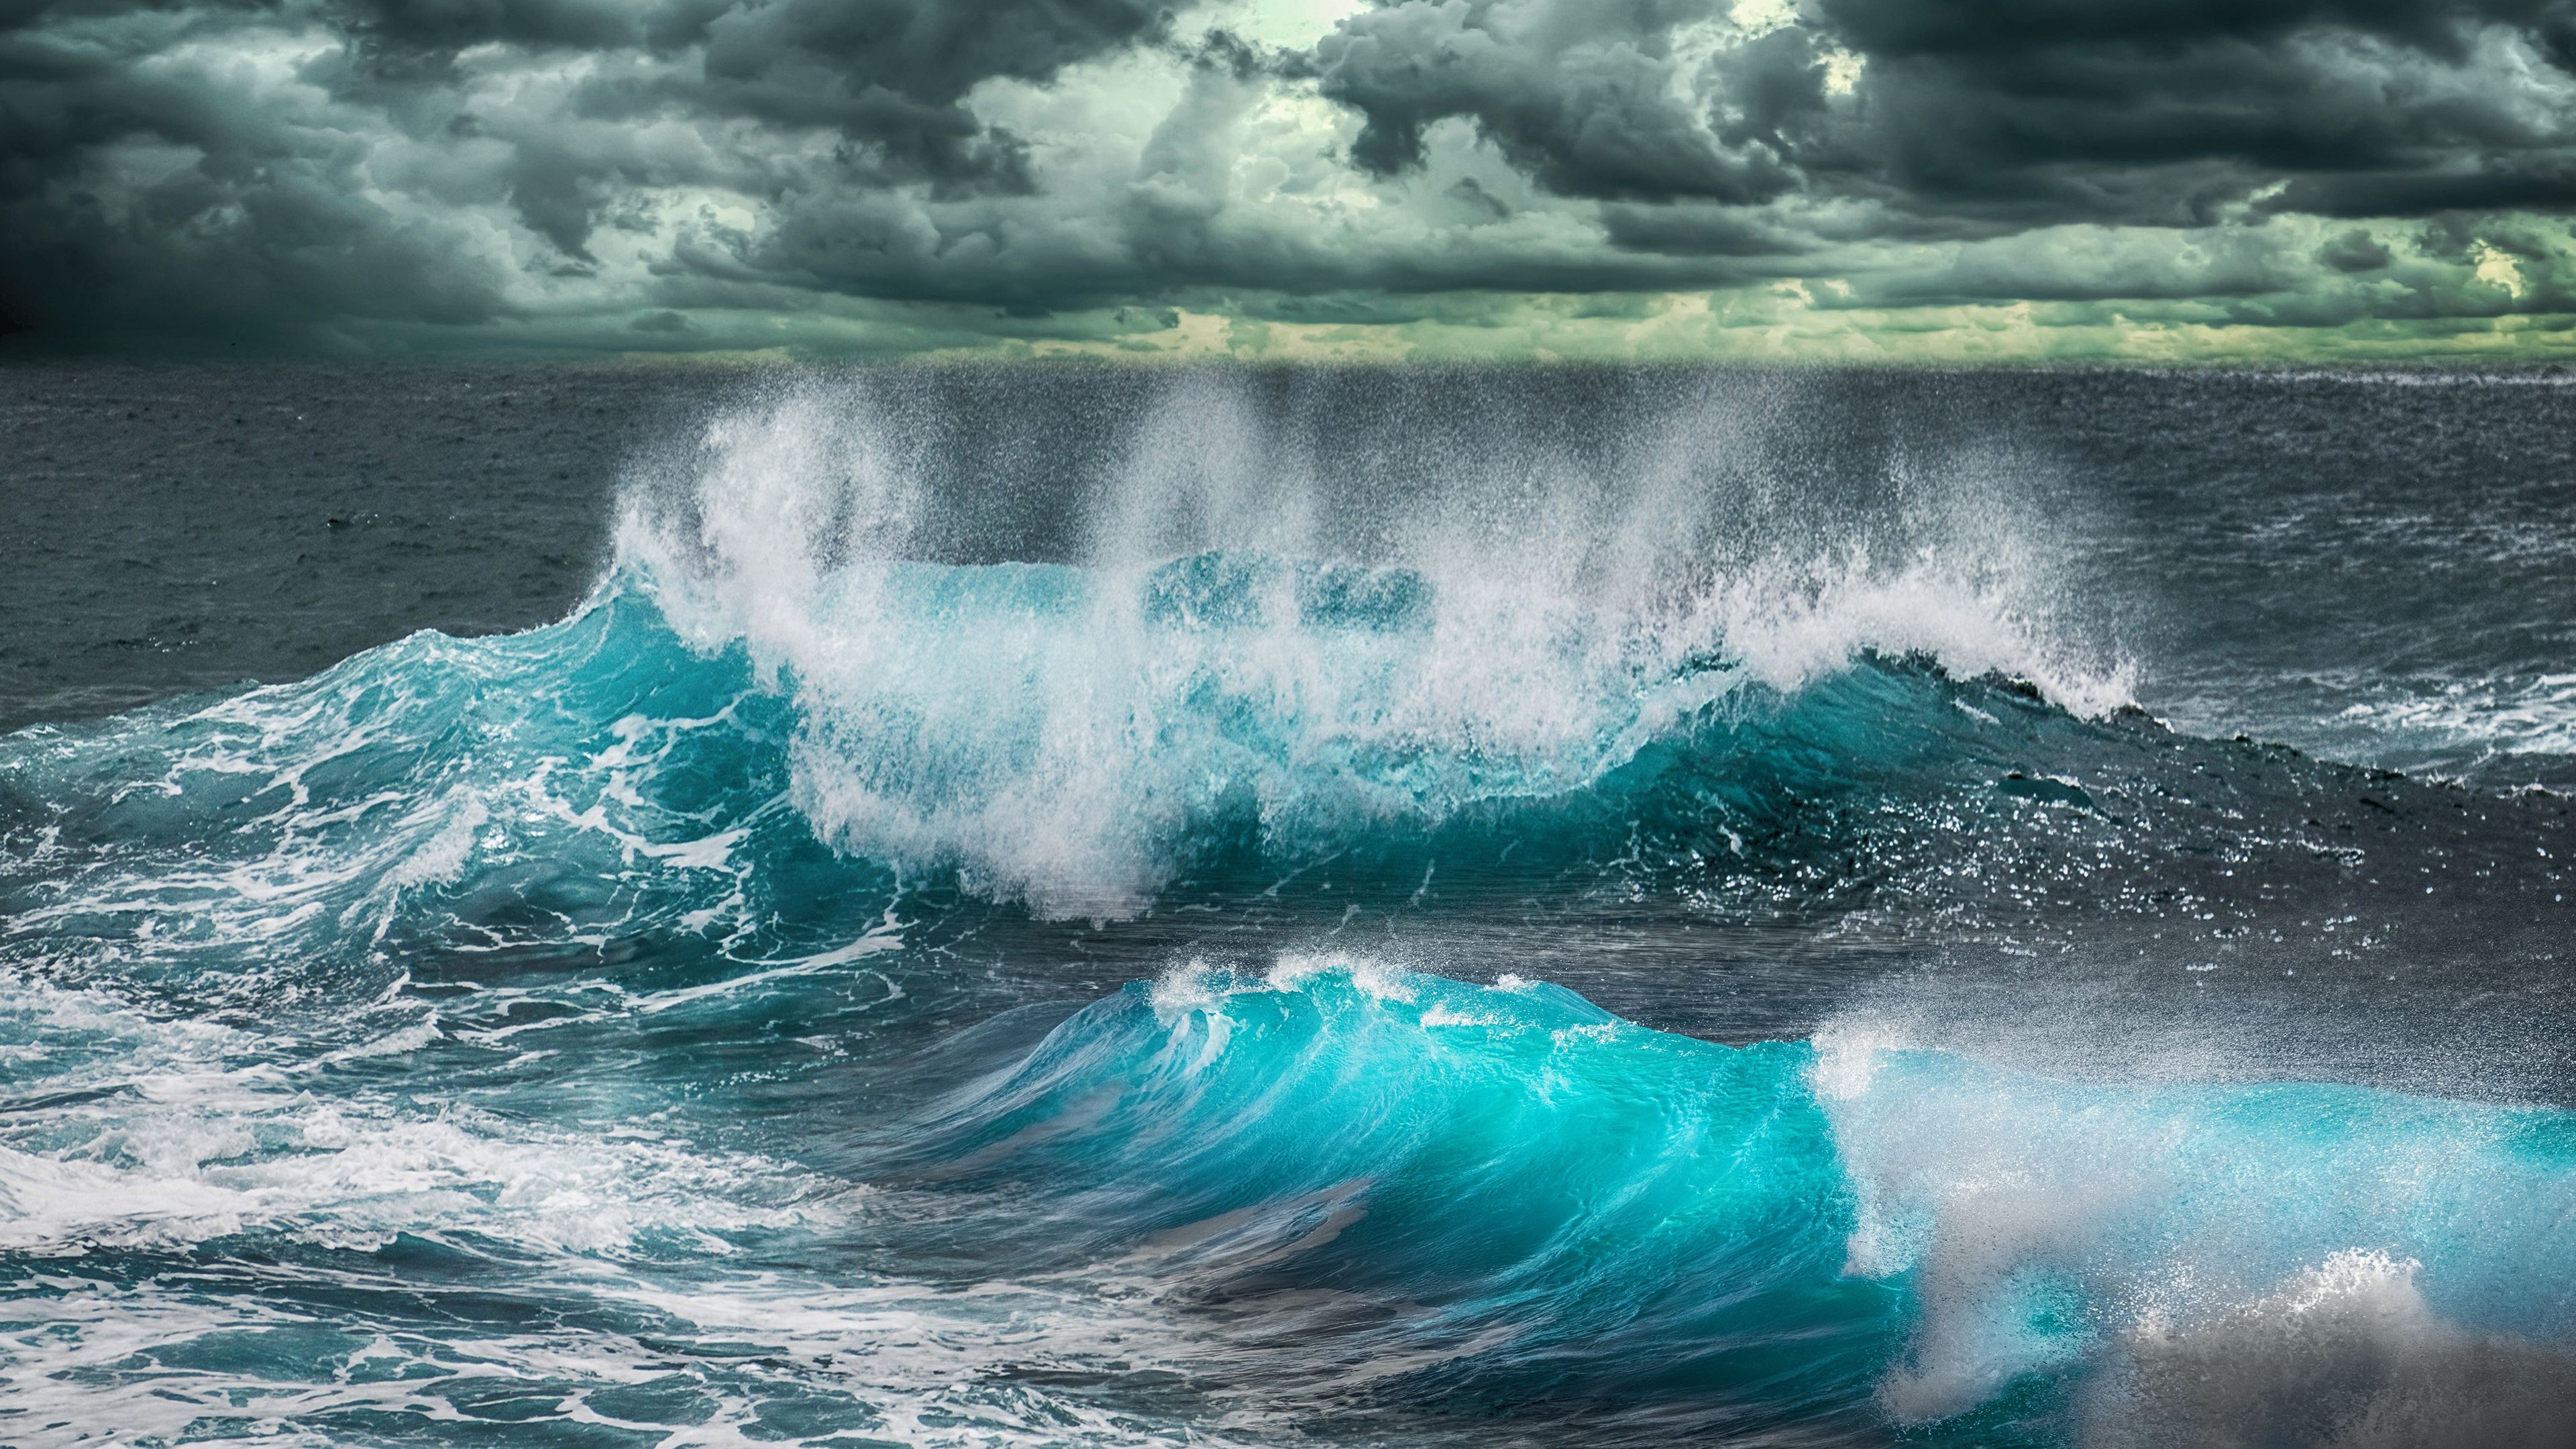 Stormy ocean waves crashing 4k Ultra HD Wallpaper. Background